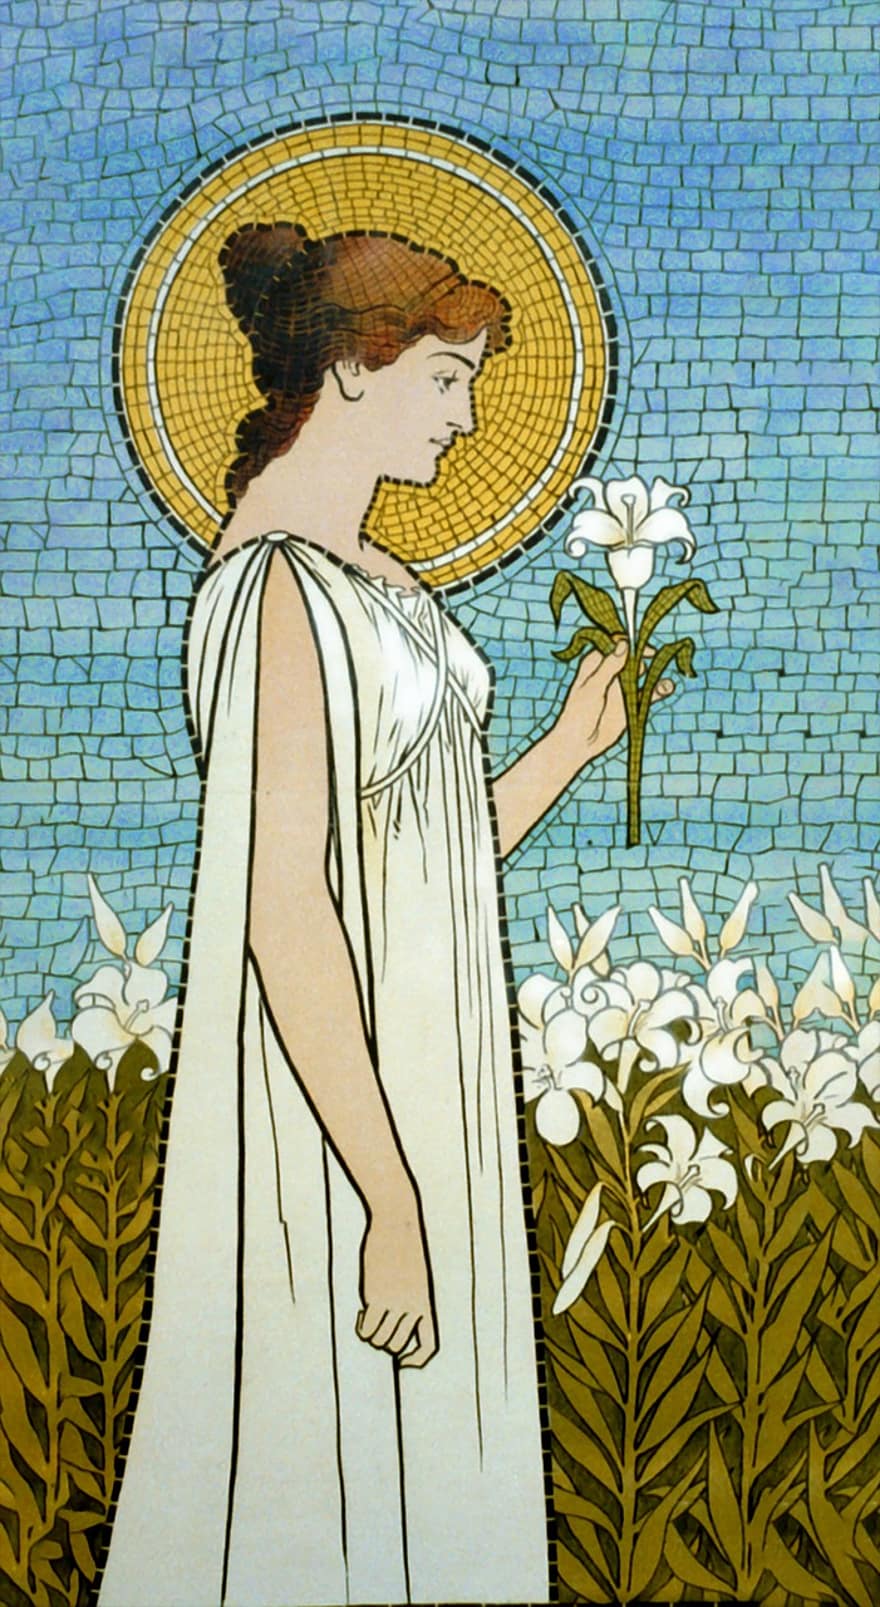 Woman, Girl, Lady, Art Deco, Mosaic, Tiles, Flowers, Bohemian, Boho, Summer, Female